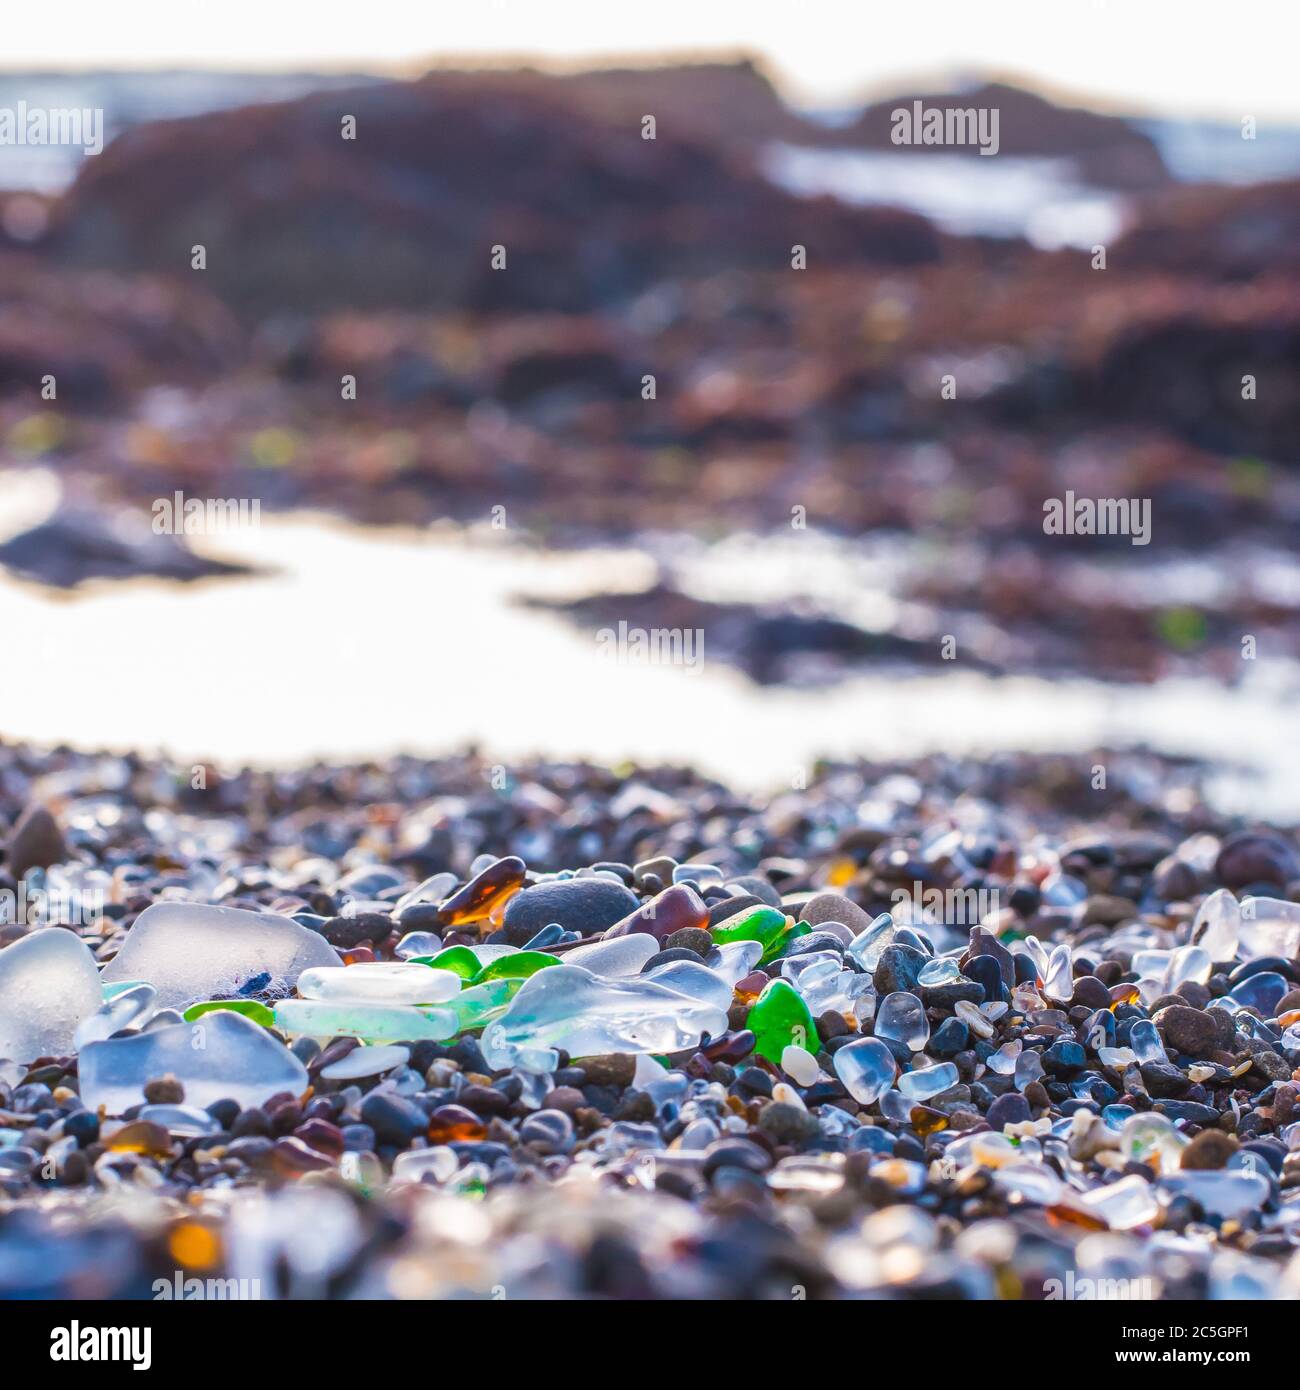 Glass Beach: The pretty beach that used to be a dump - InsureandGo